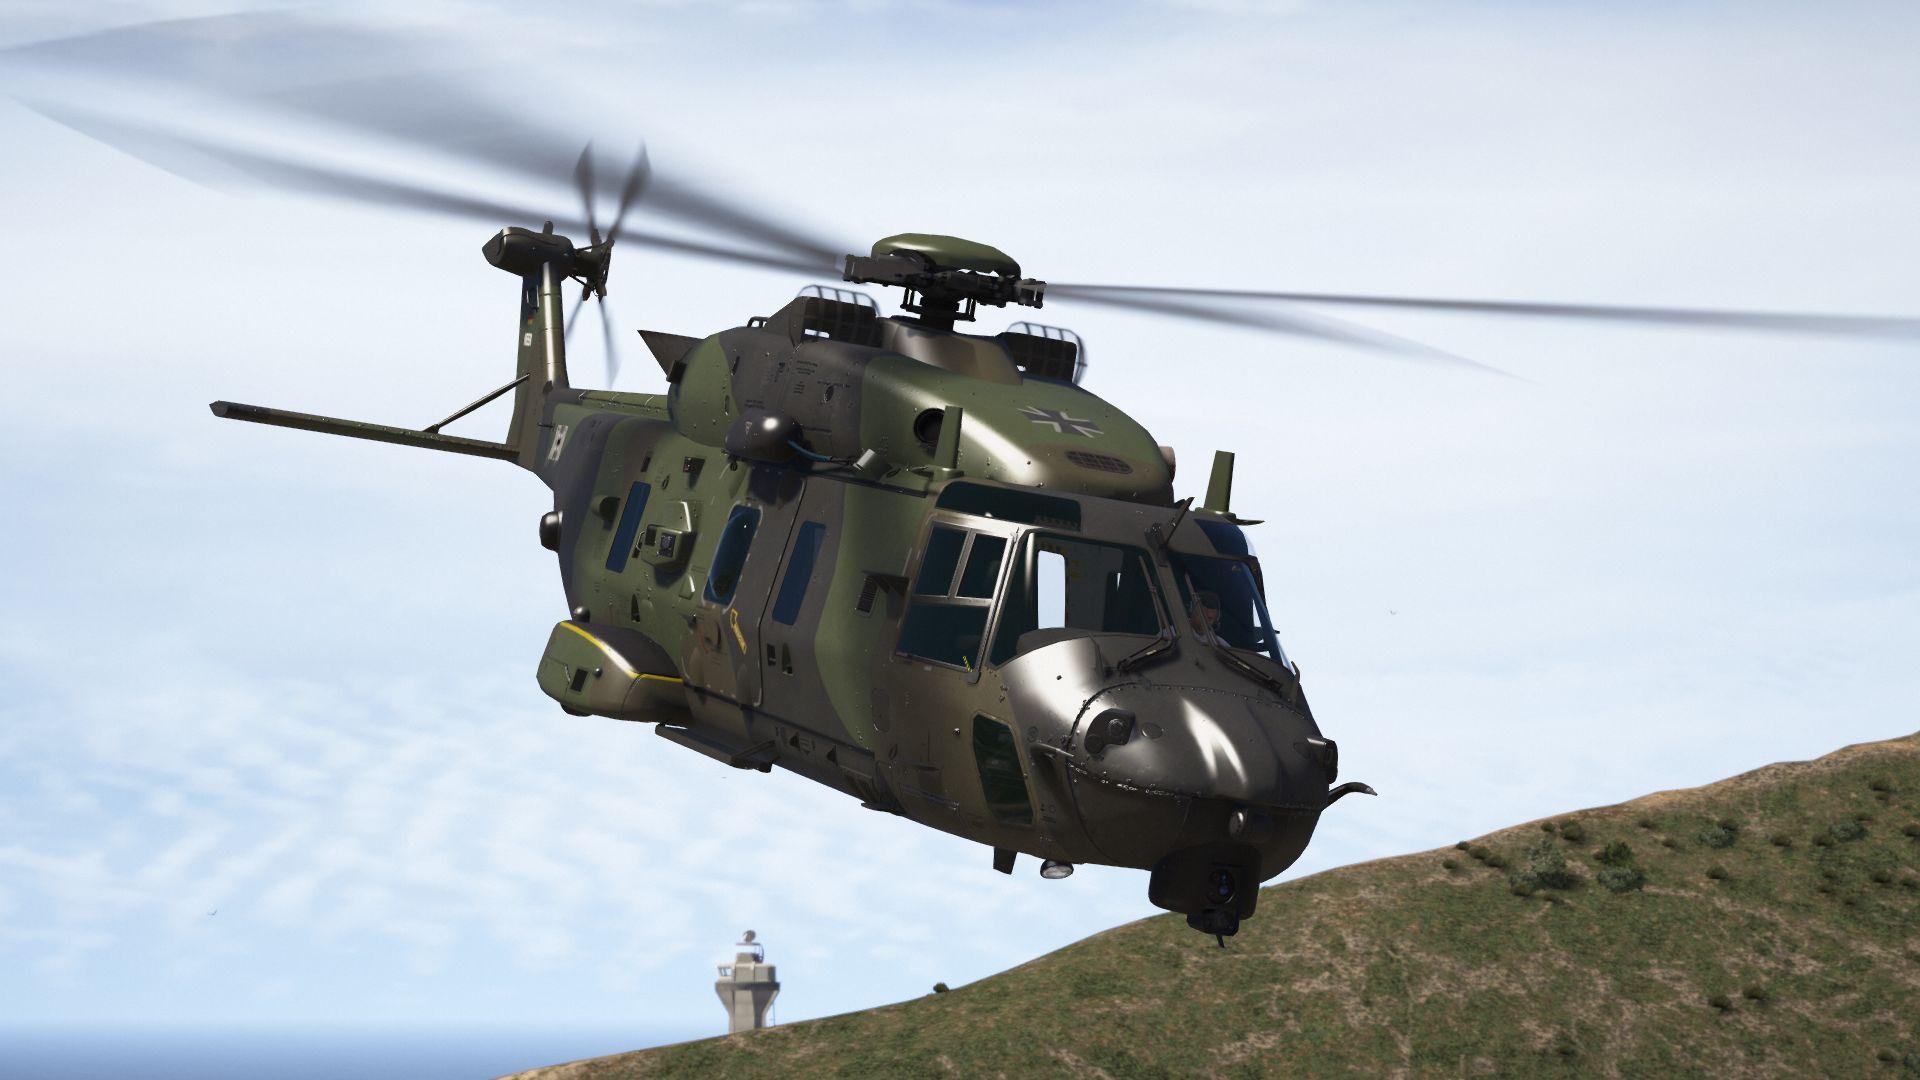 Гта мод вертолет. GTA 5 Helicopter. Военный вертолет ГТА 5. Вертолет ГТА 5. Вертолет Еврокоптер ГТА 5.